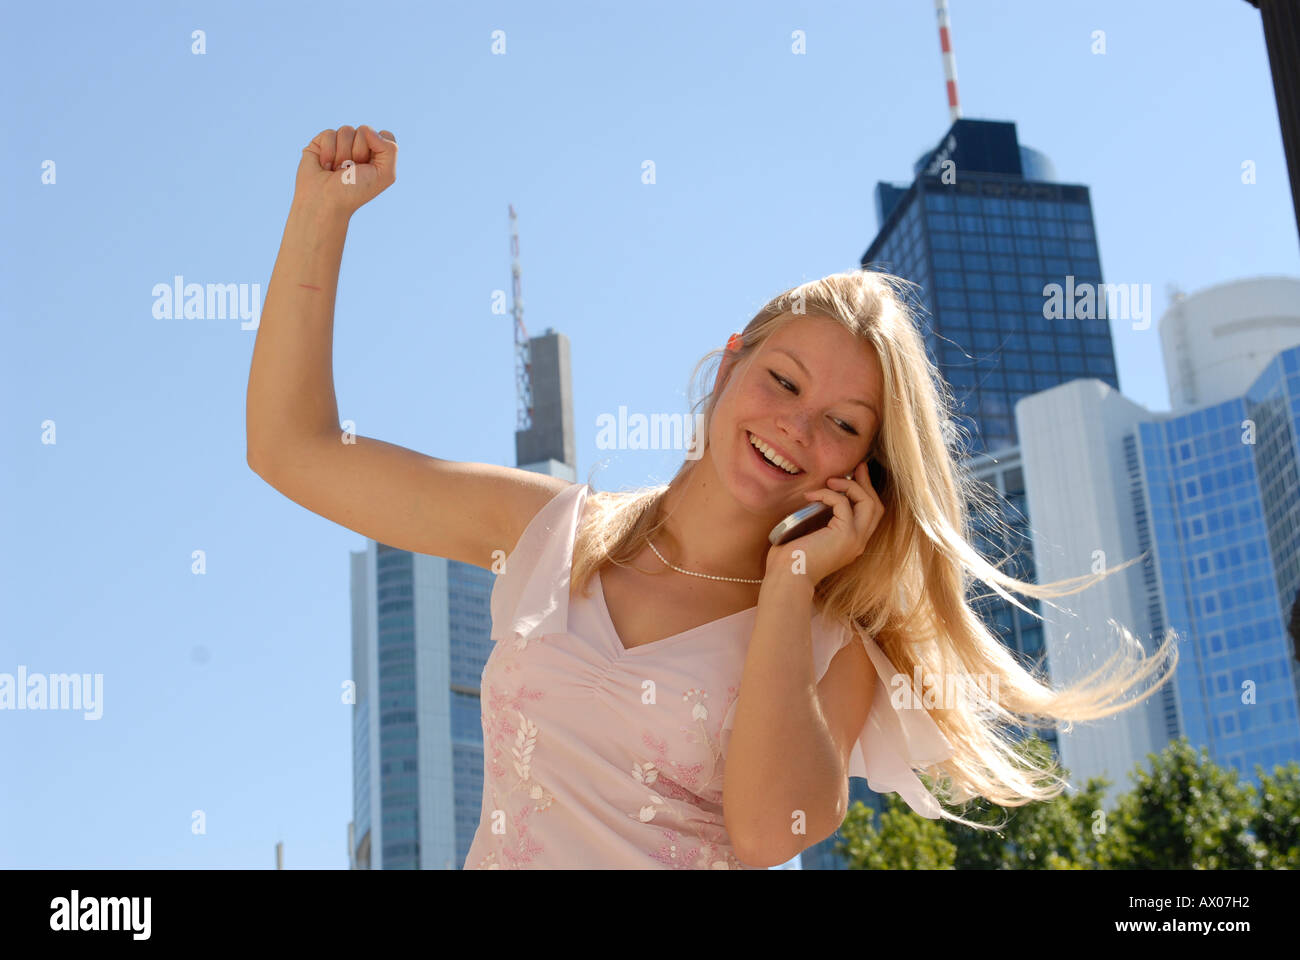 junge Frau blond lange Haare Stadt City Hochhaus Glasfassaden Teenager Handy mobile cellphone Telefon telefonieren Erfolg Emotio Stock Photo